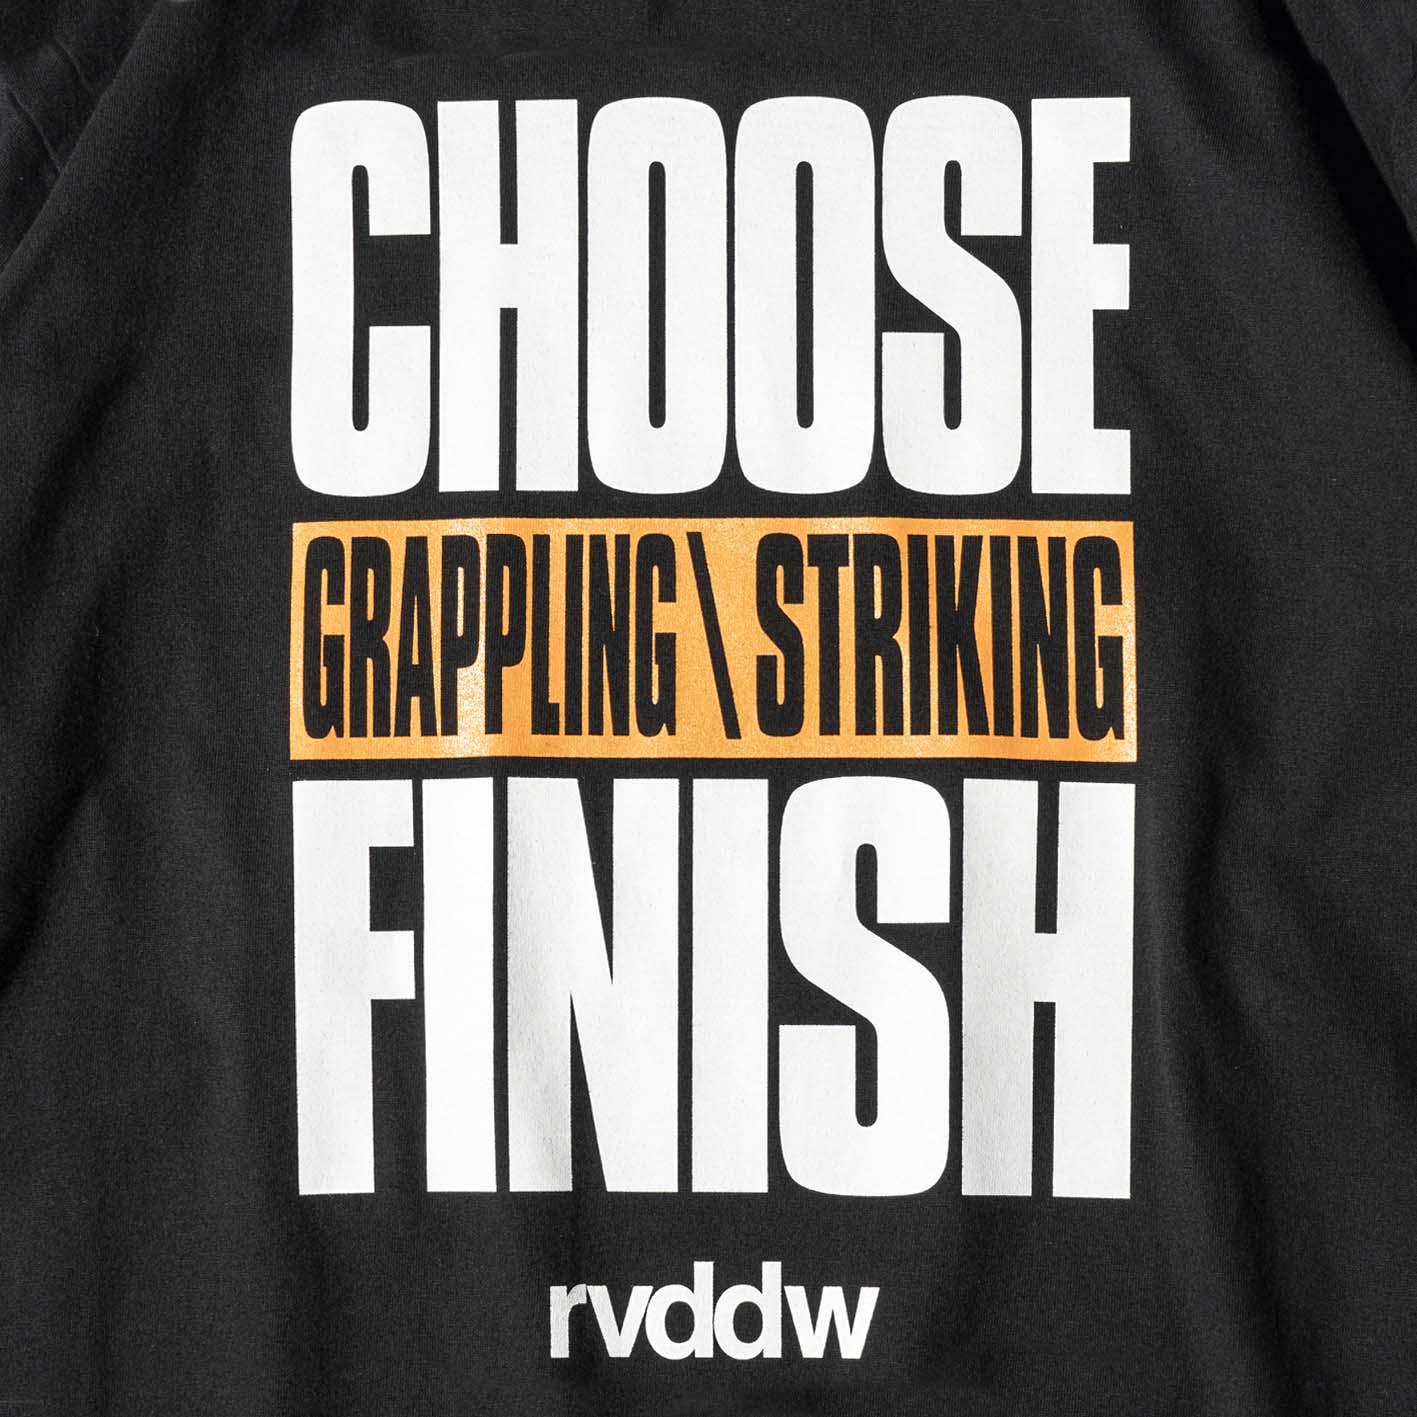 Choose The Finish T-Shirt-Reversal RVDDW-ChokeSports